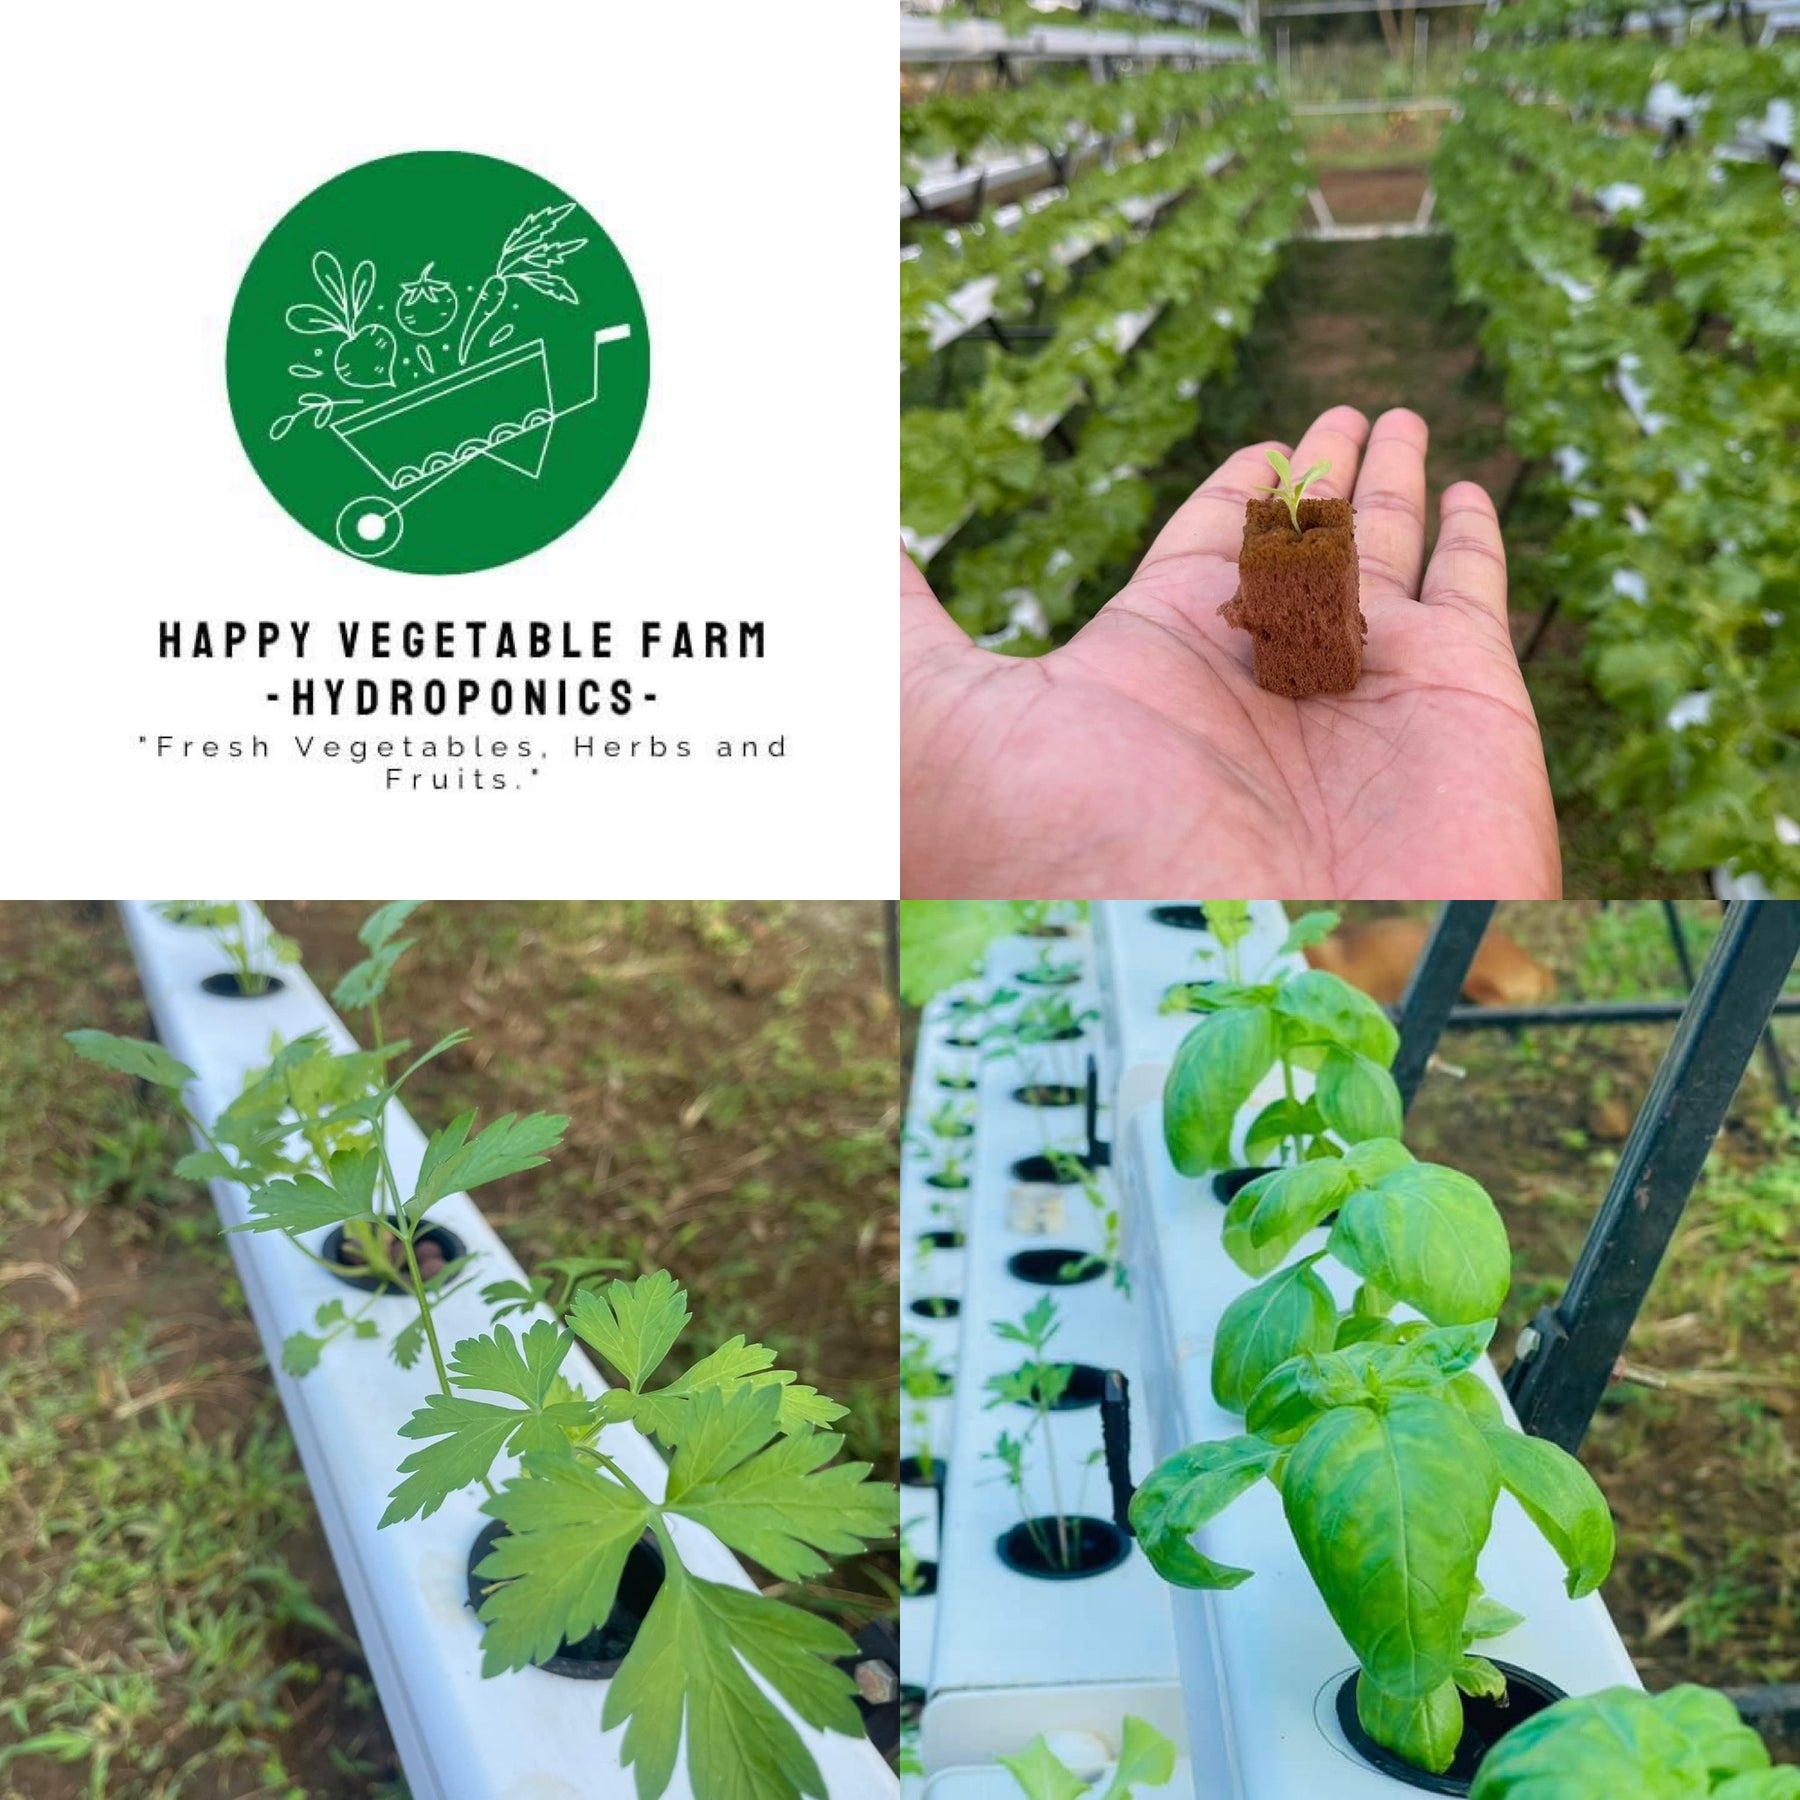 Happy Vegetable Farm | locally-grown hydroponics lettuce